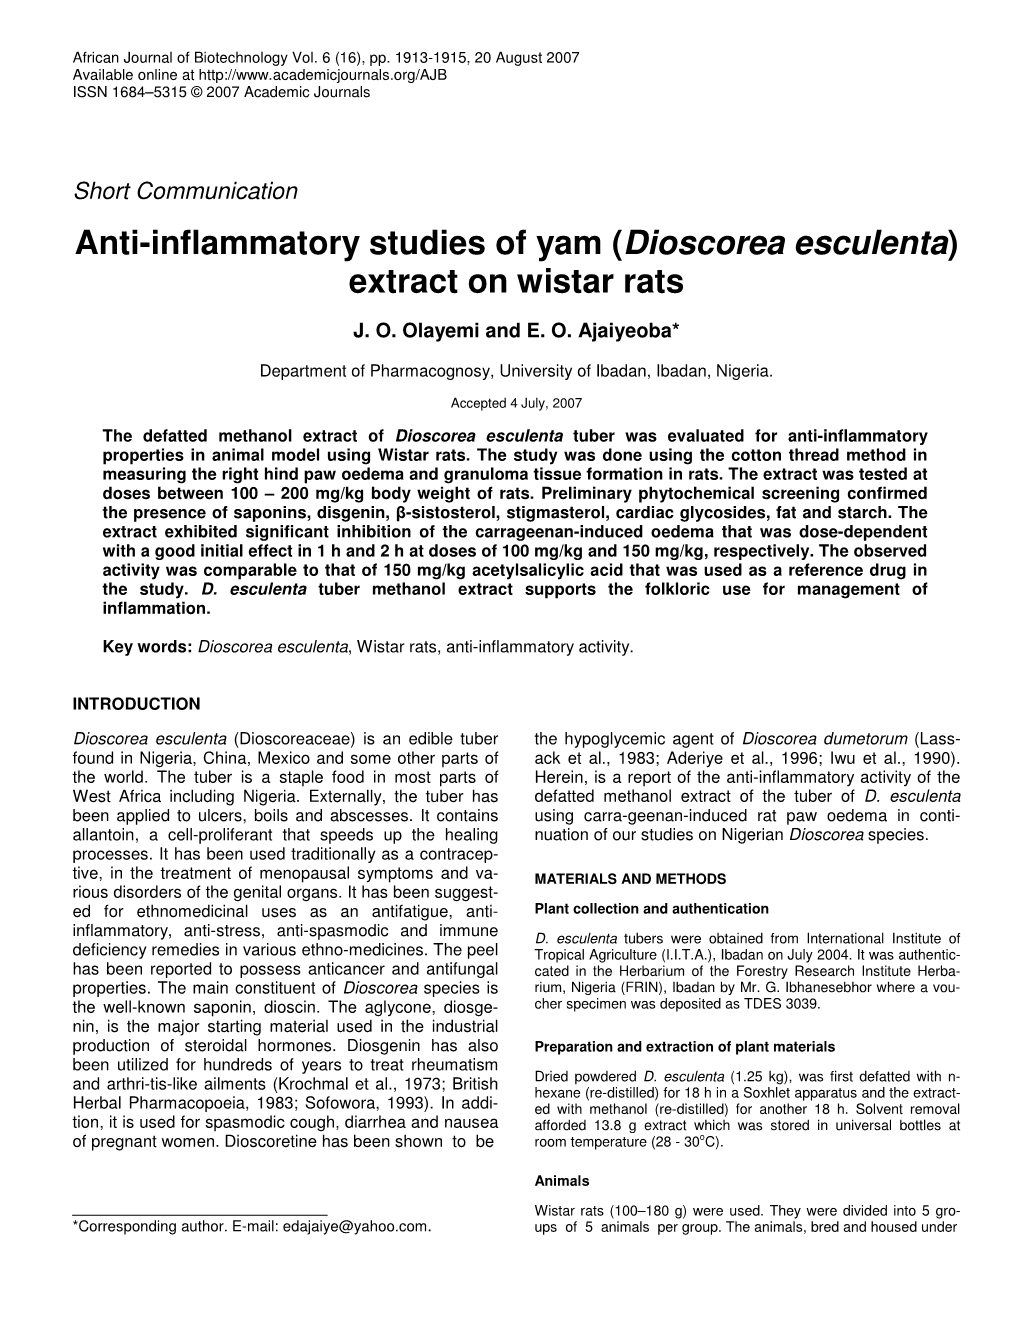 Anti-Inflammatory Studies of Yam (Dioscorea Esculenta) Extract on Wistar Rats